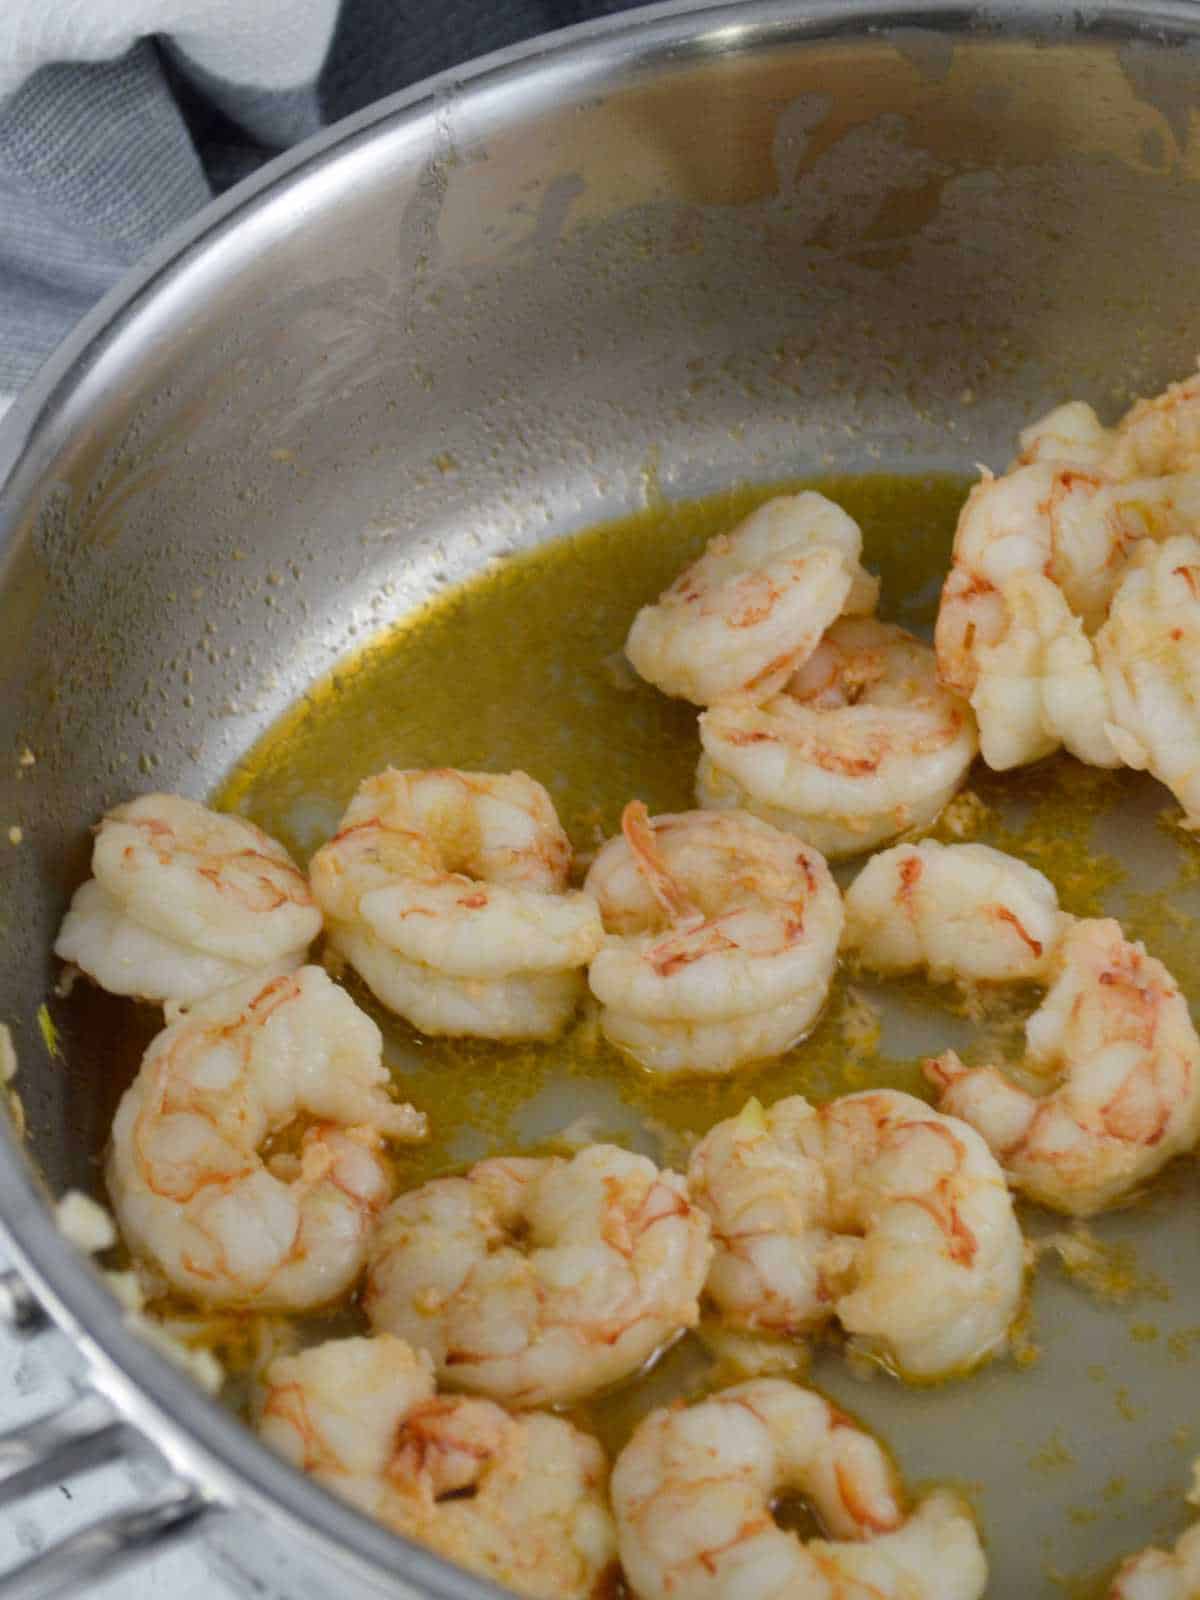 saute pan with shrimp turning pink.